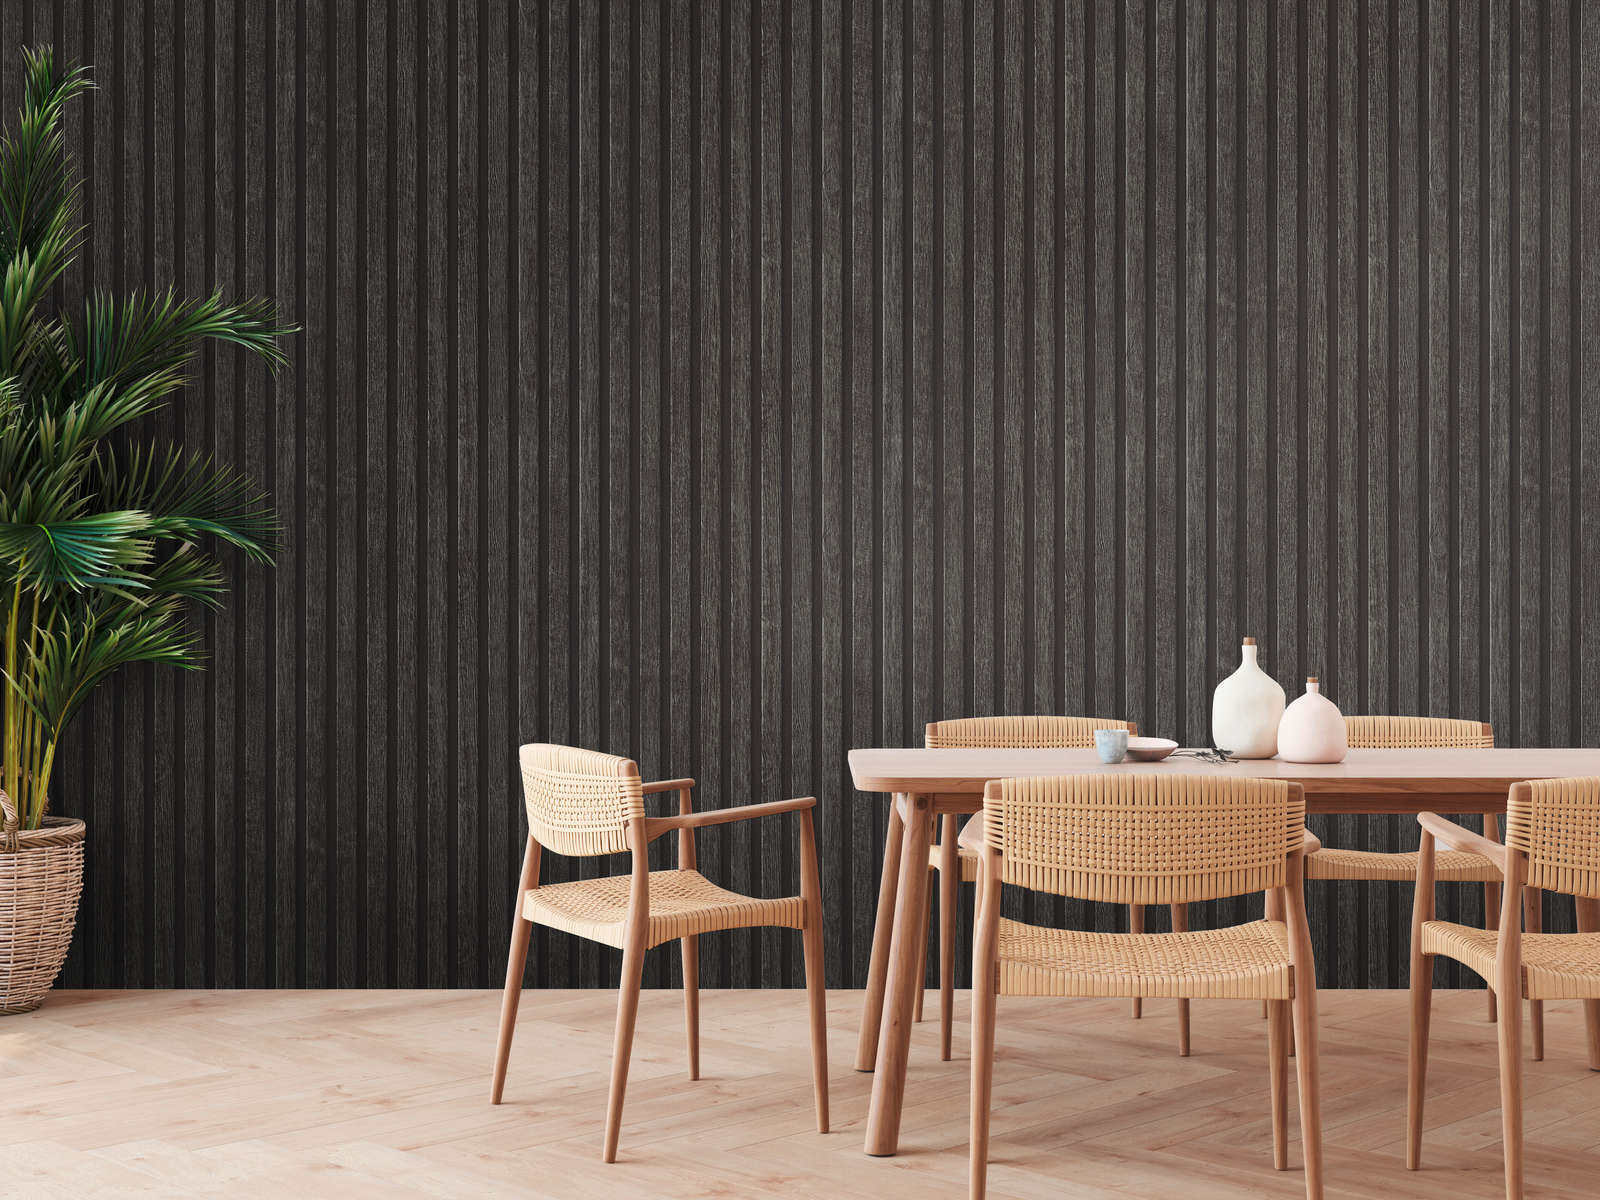             Wallpaper wood look with panel pattern - black, brown
        